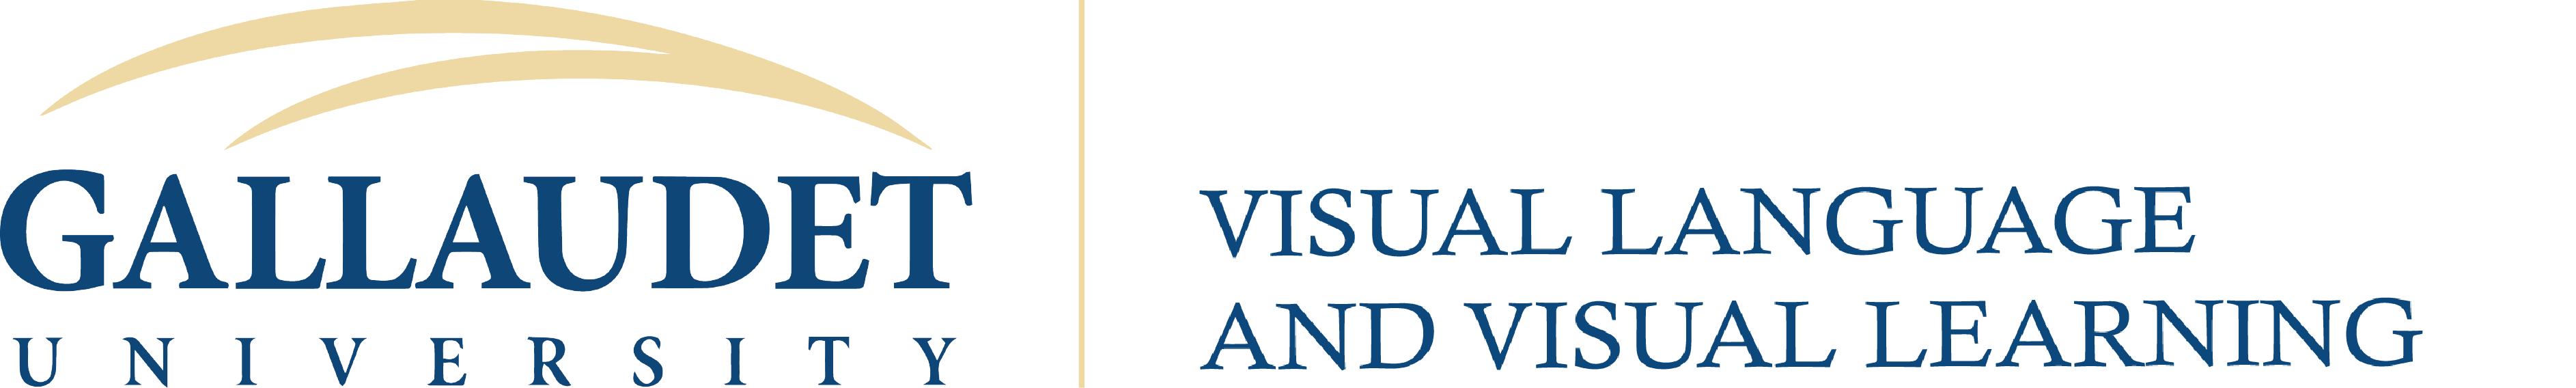 Logo - Gallaudet University | Visual Language and Visual Learning